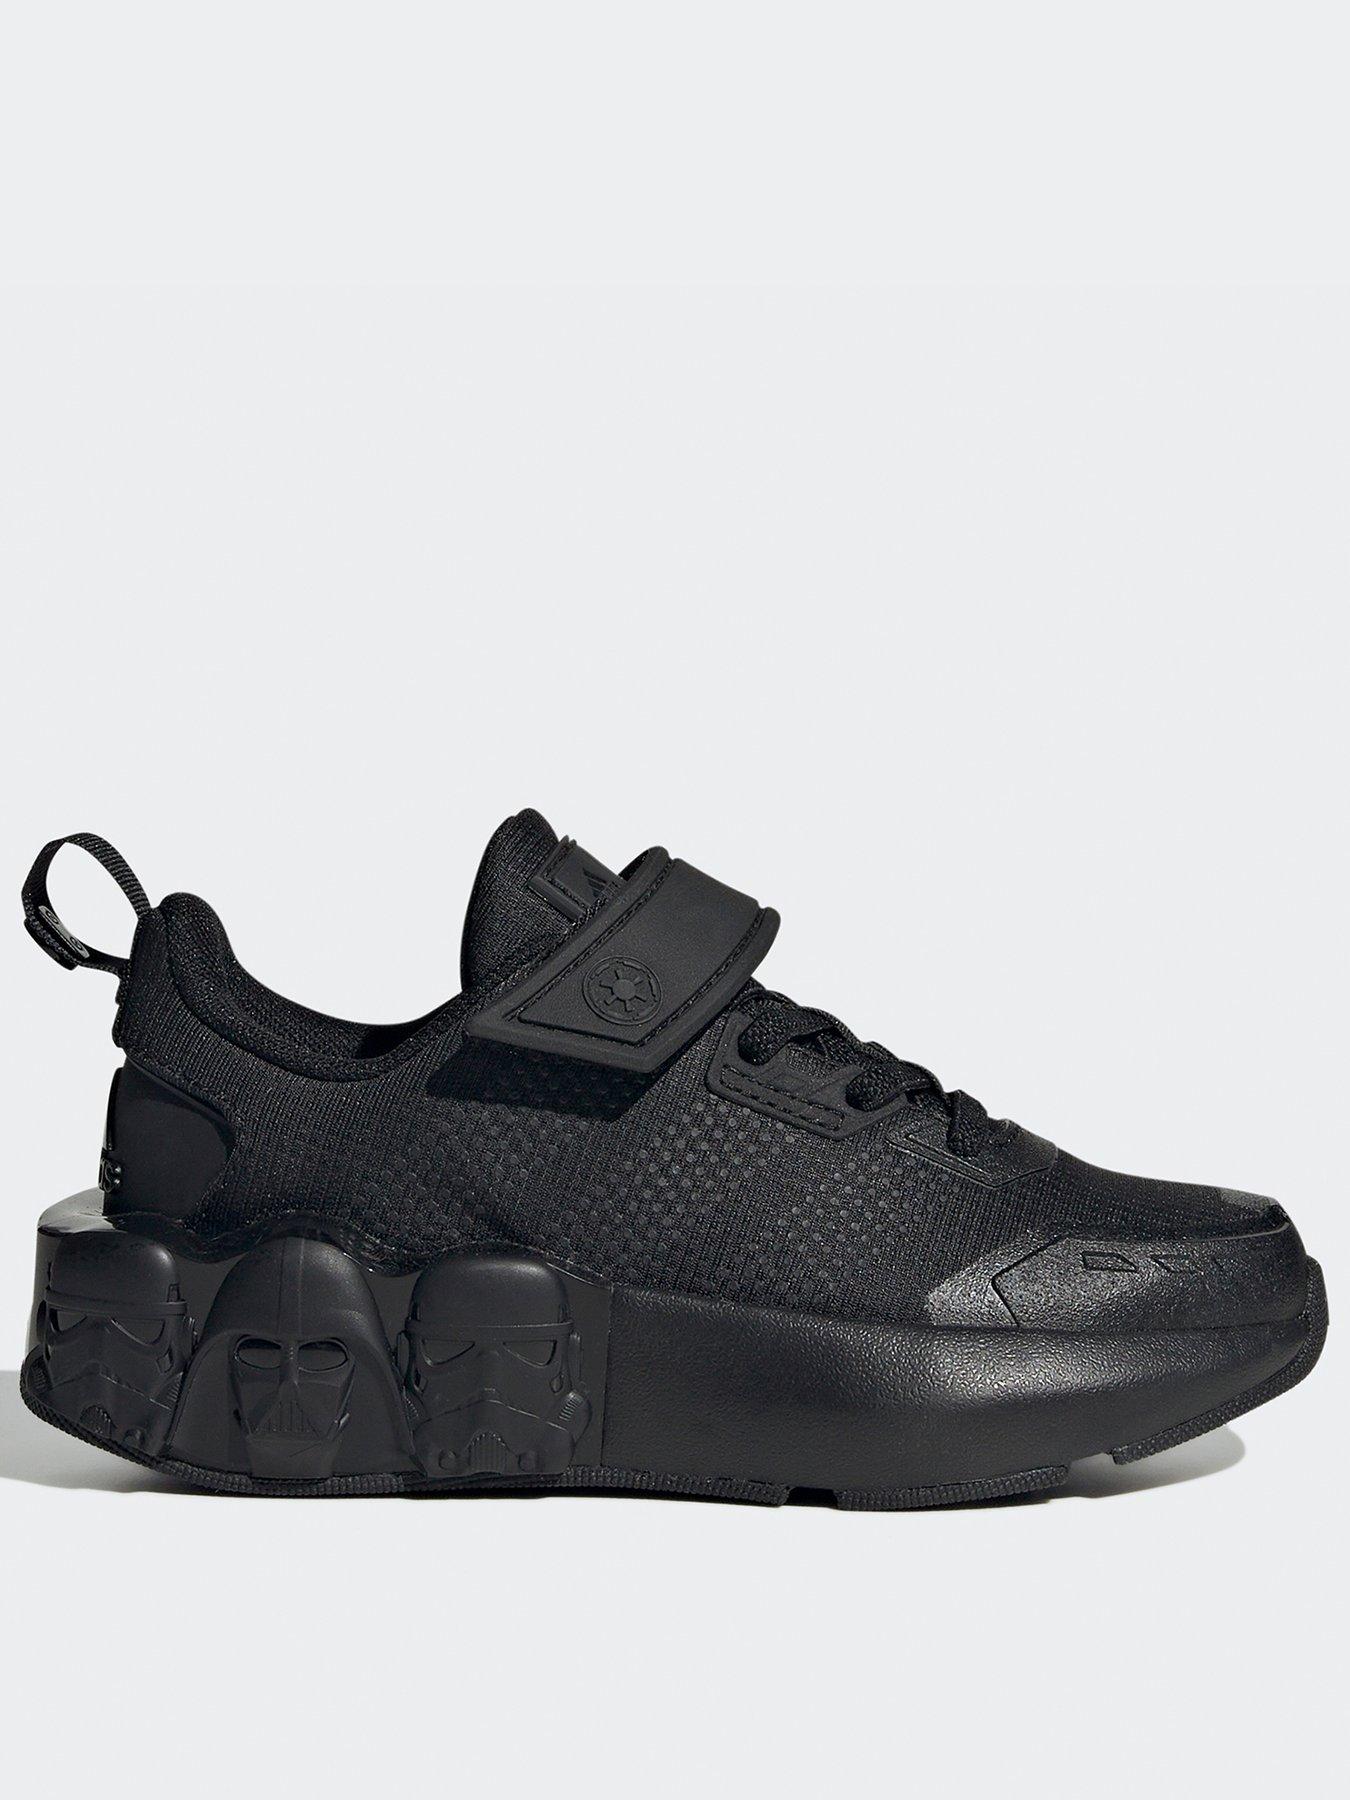 adidas Sportswear Kids Boys Star Wars Runner Trainers - Black/Black, Black/Black, Size 2 Older